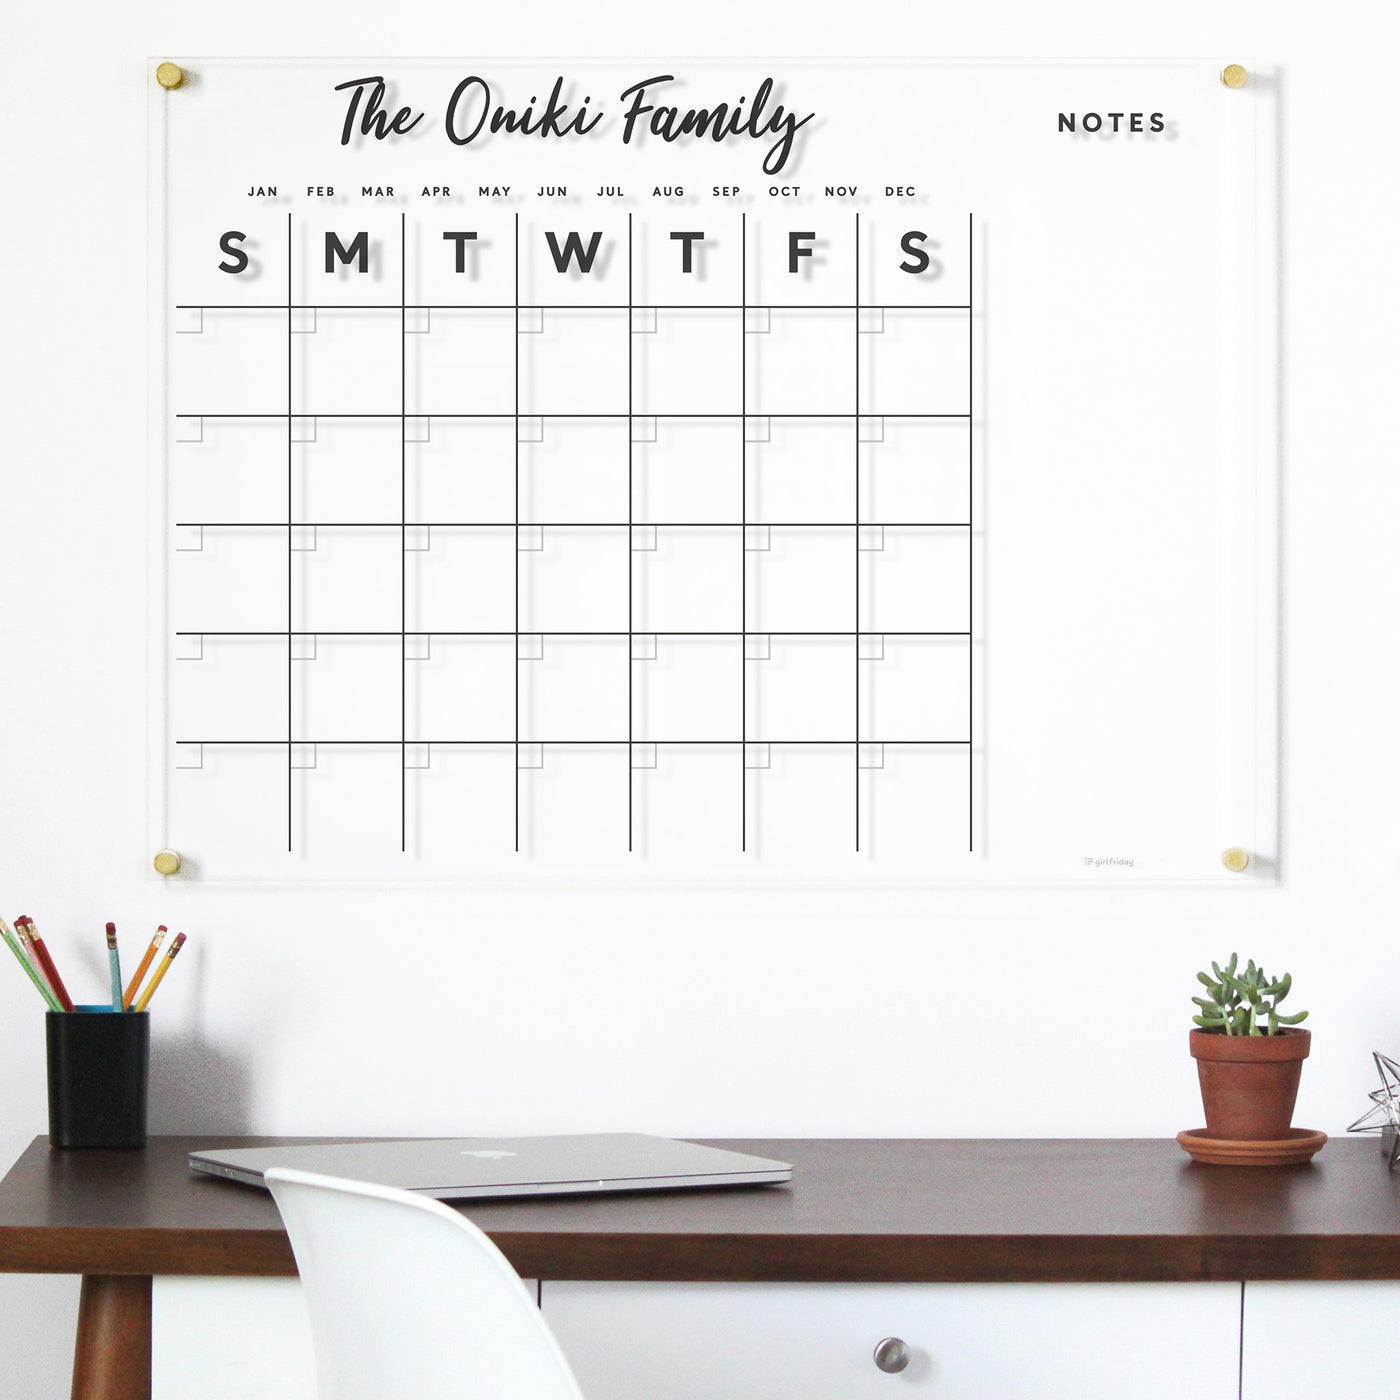 Acrylic Calendar with family name